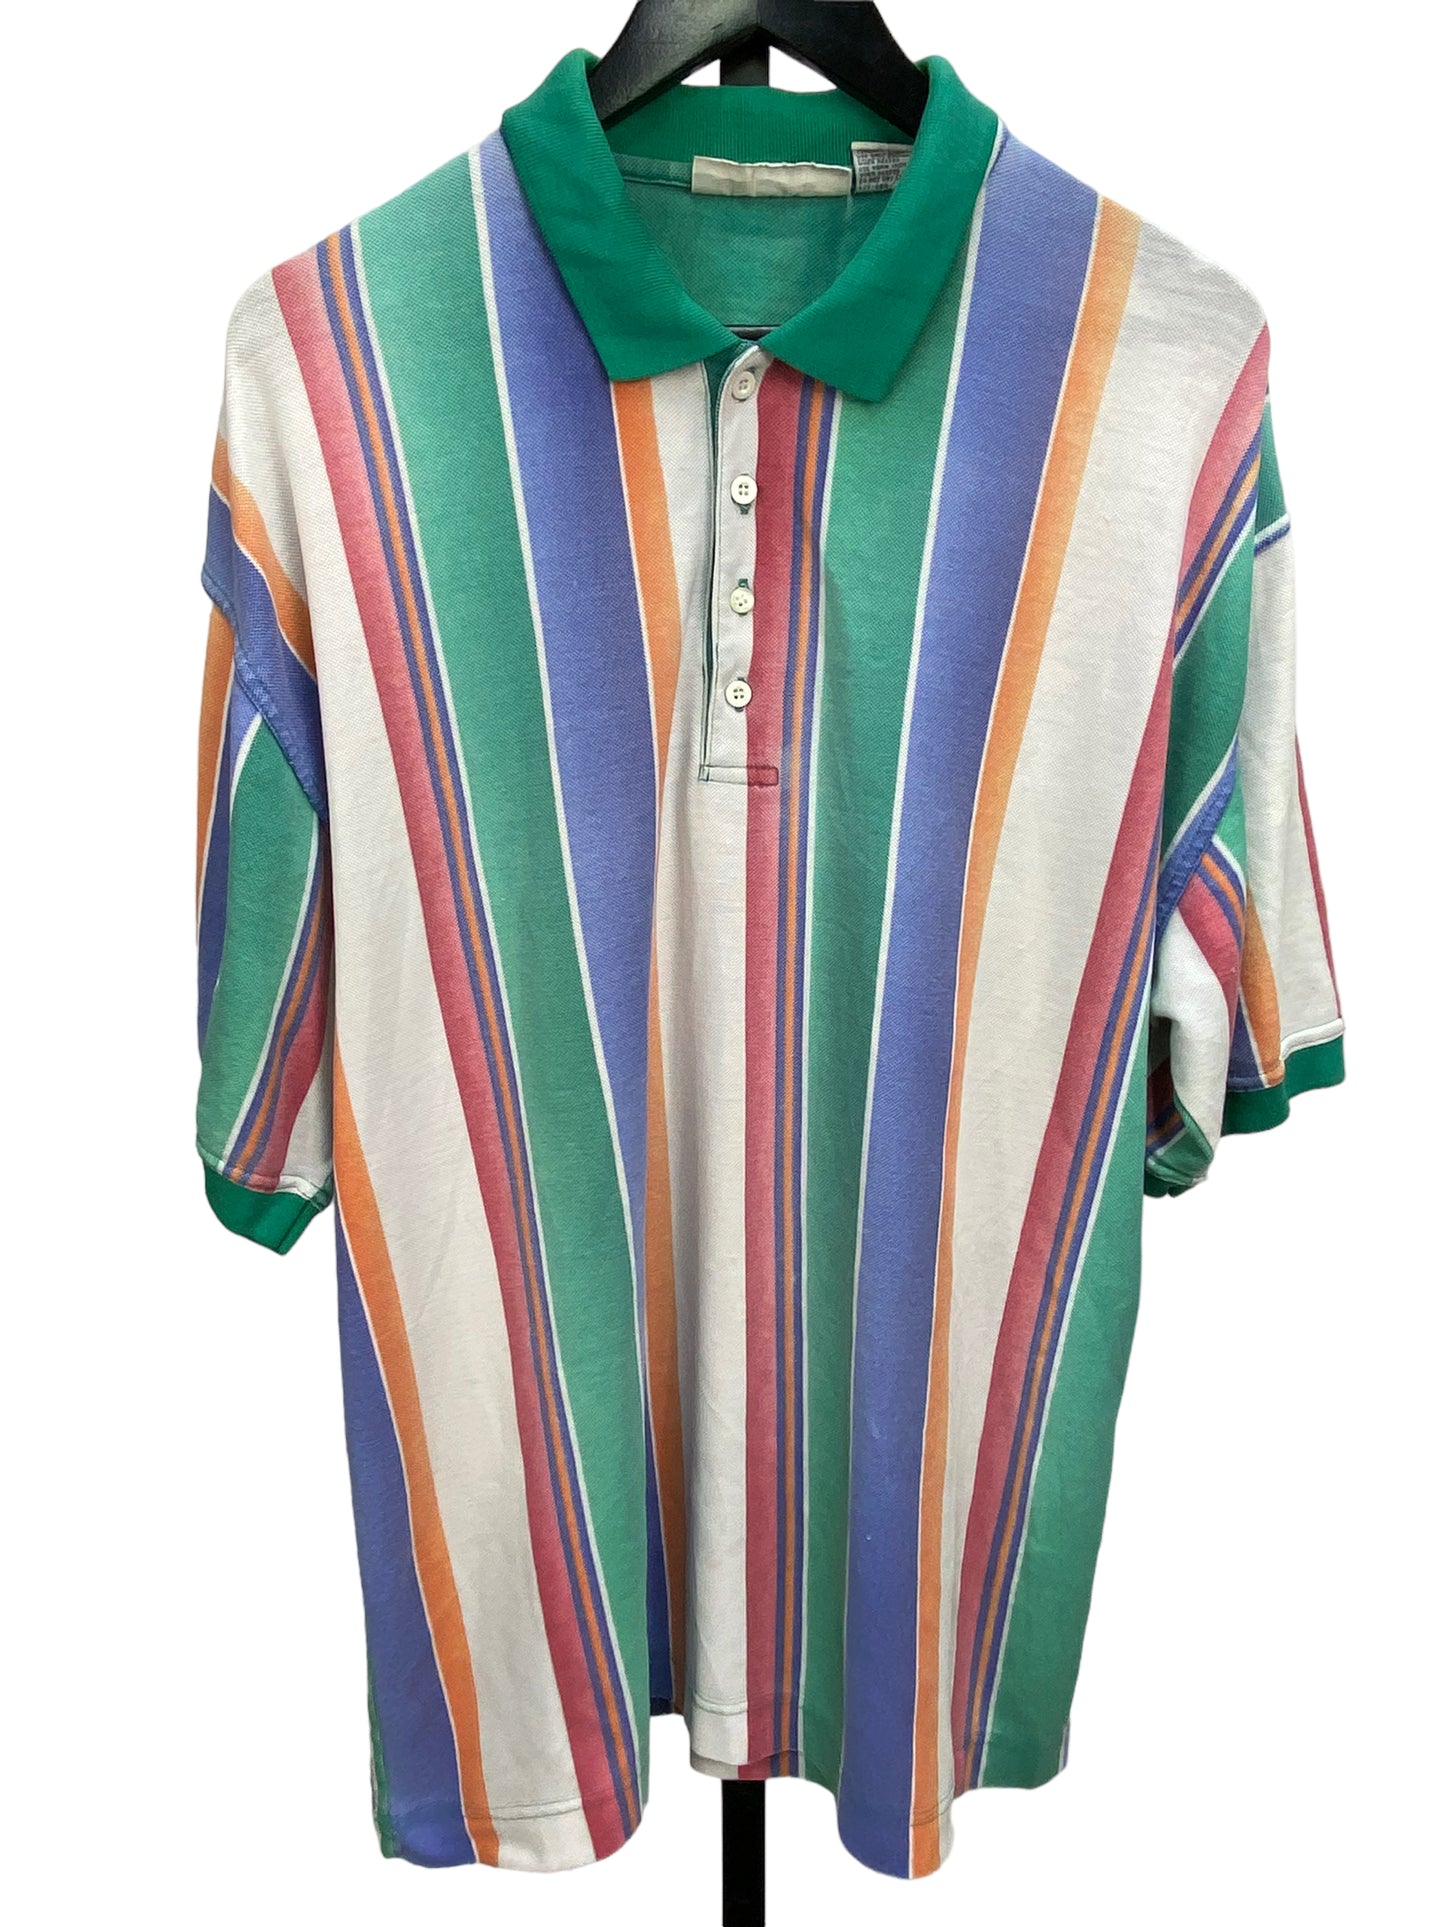 VTG Green Collar Striped Button Shirt Sz XL